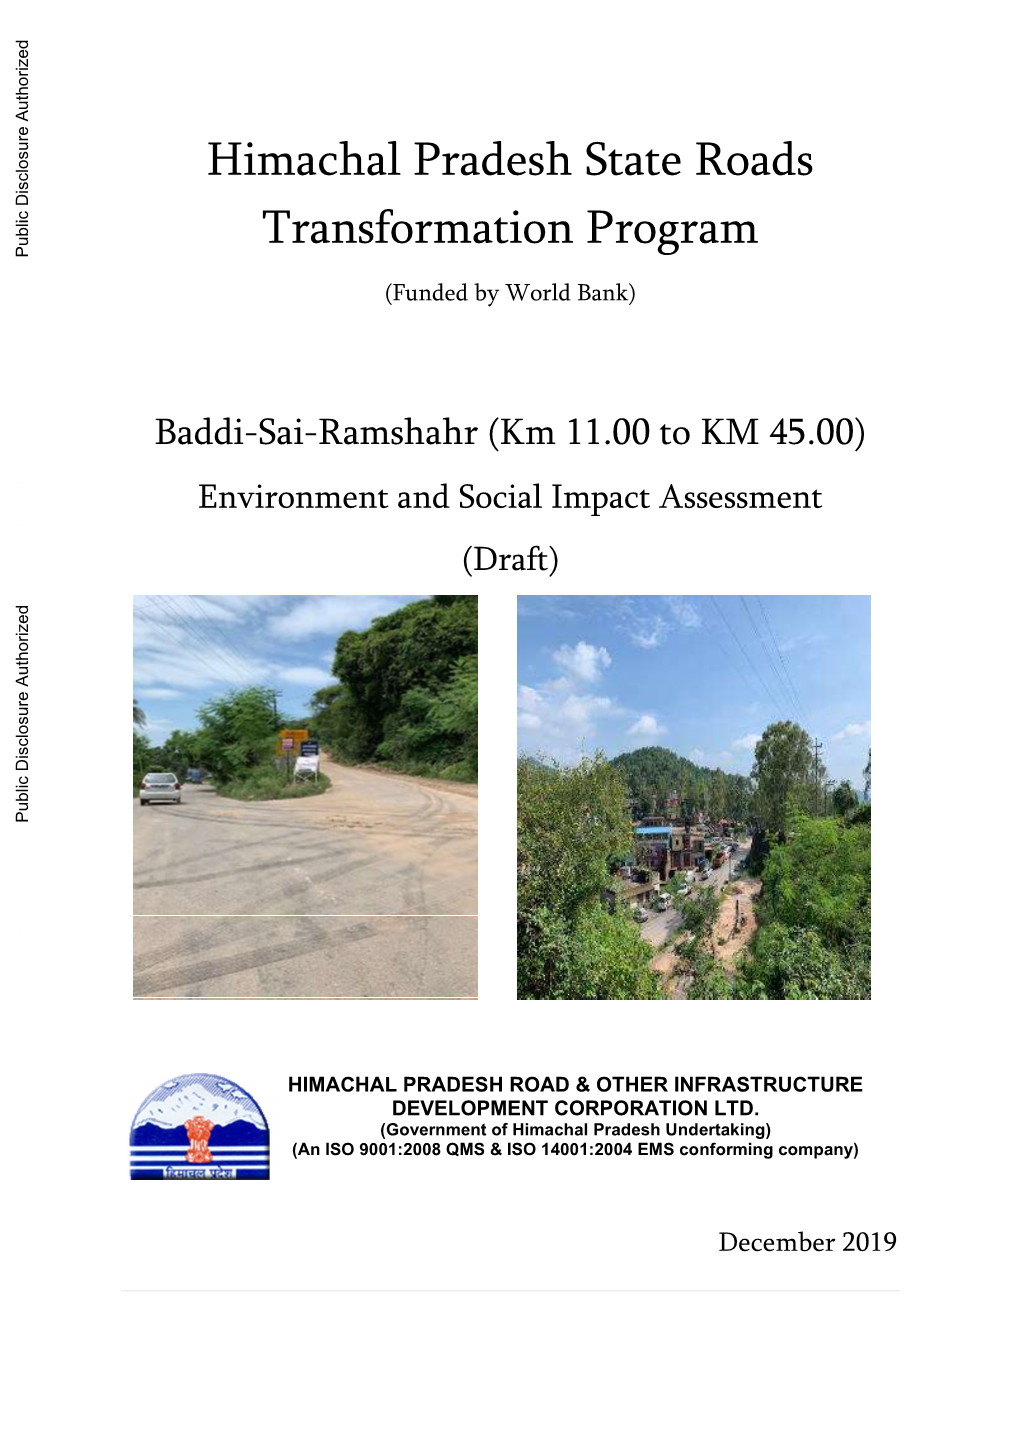 Himachal Pradesh State Roads Transformation Program